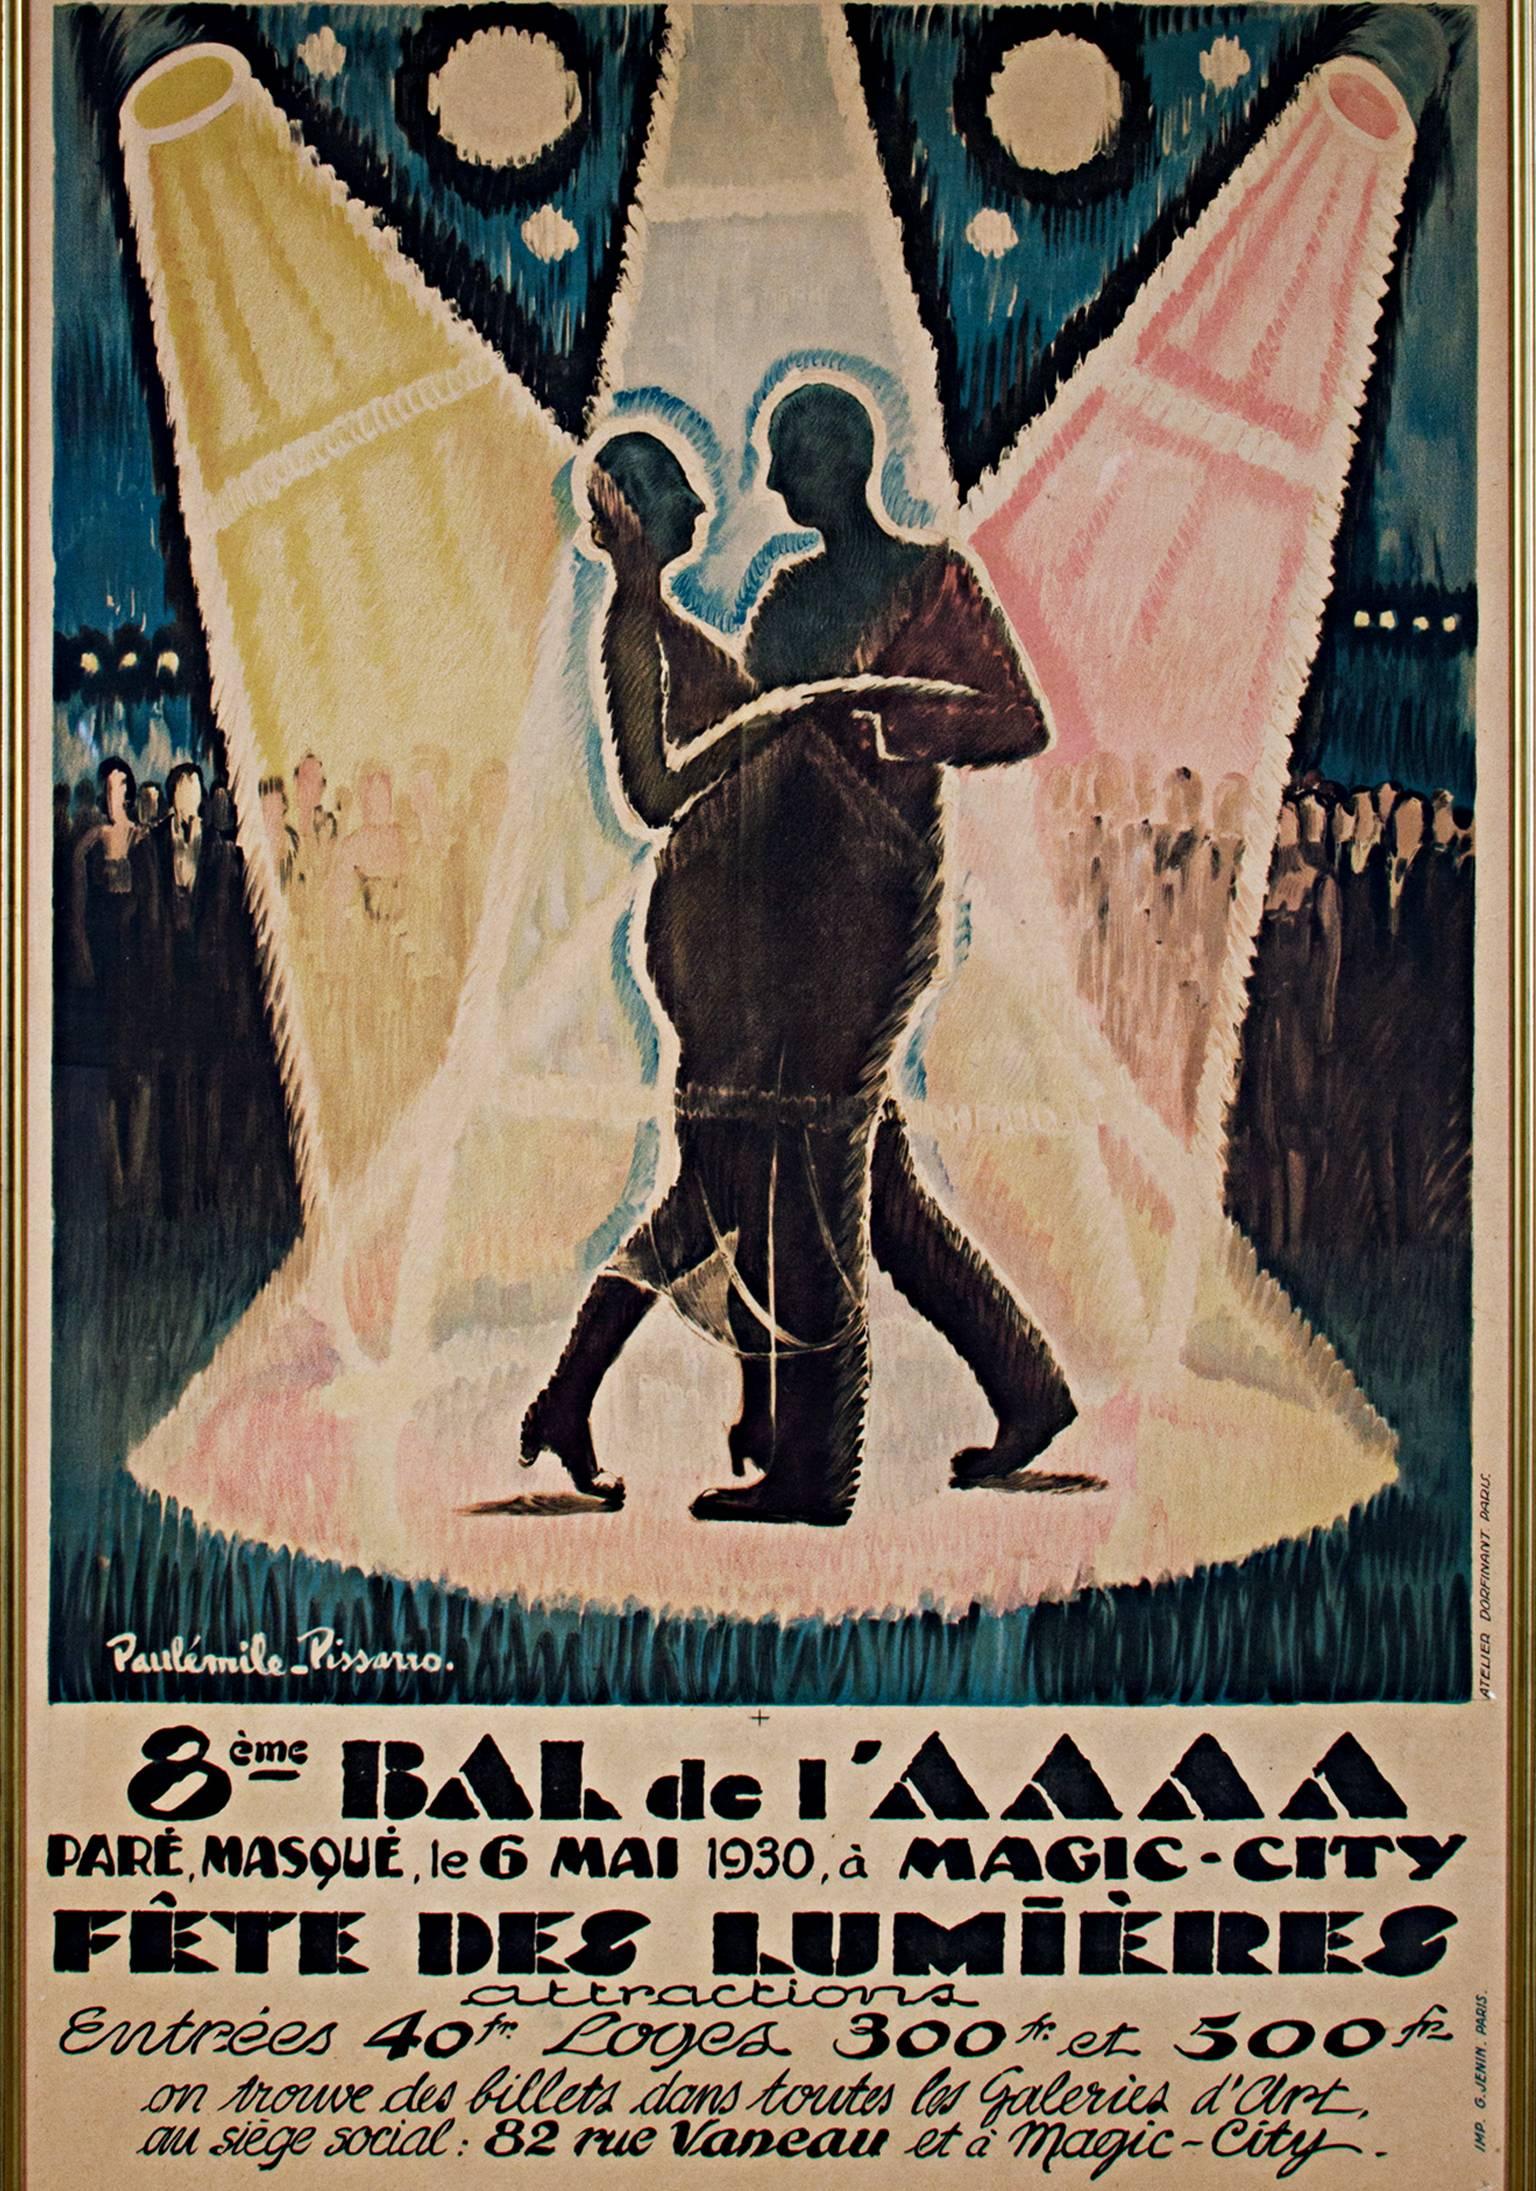 Paul Emile Pissarro Figurative Print - "Bal de l'AAAA Festival of Light, " Original Lithograph Poster by Paul Pissarro